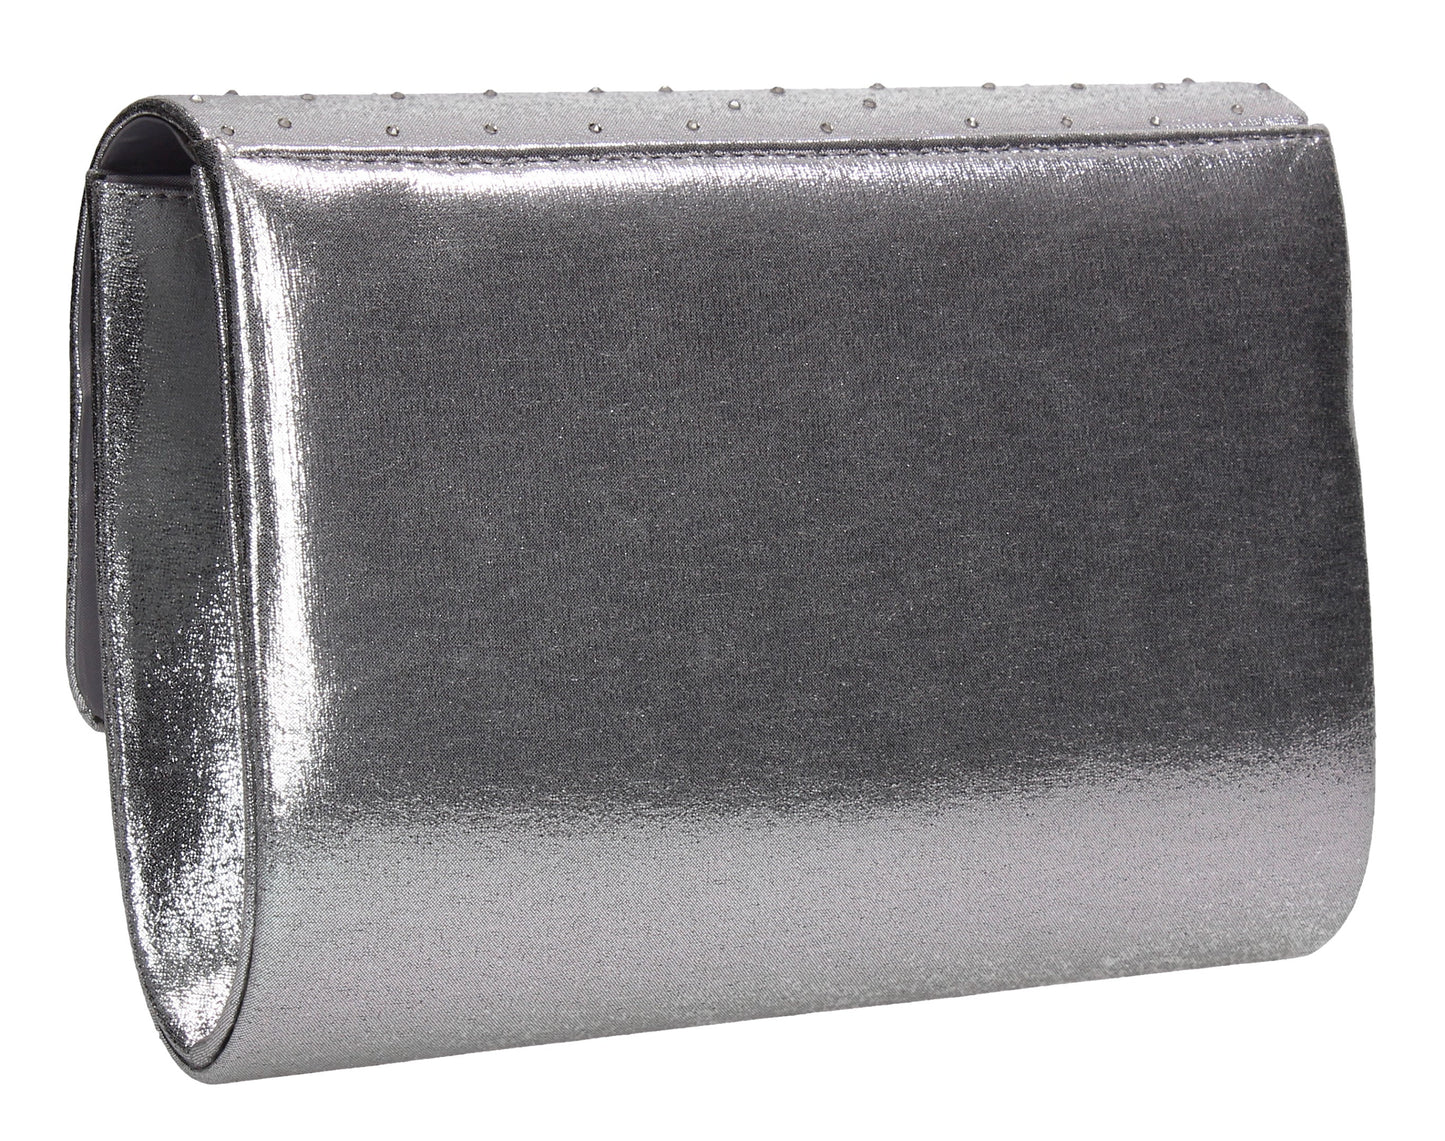 SWANKYSWANS Natalie Diamante Clutch Bag Silver Cute Cheap Clutch Bag For Weddings School and Work